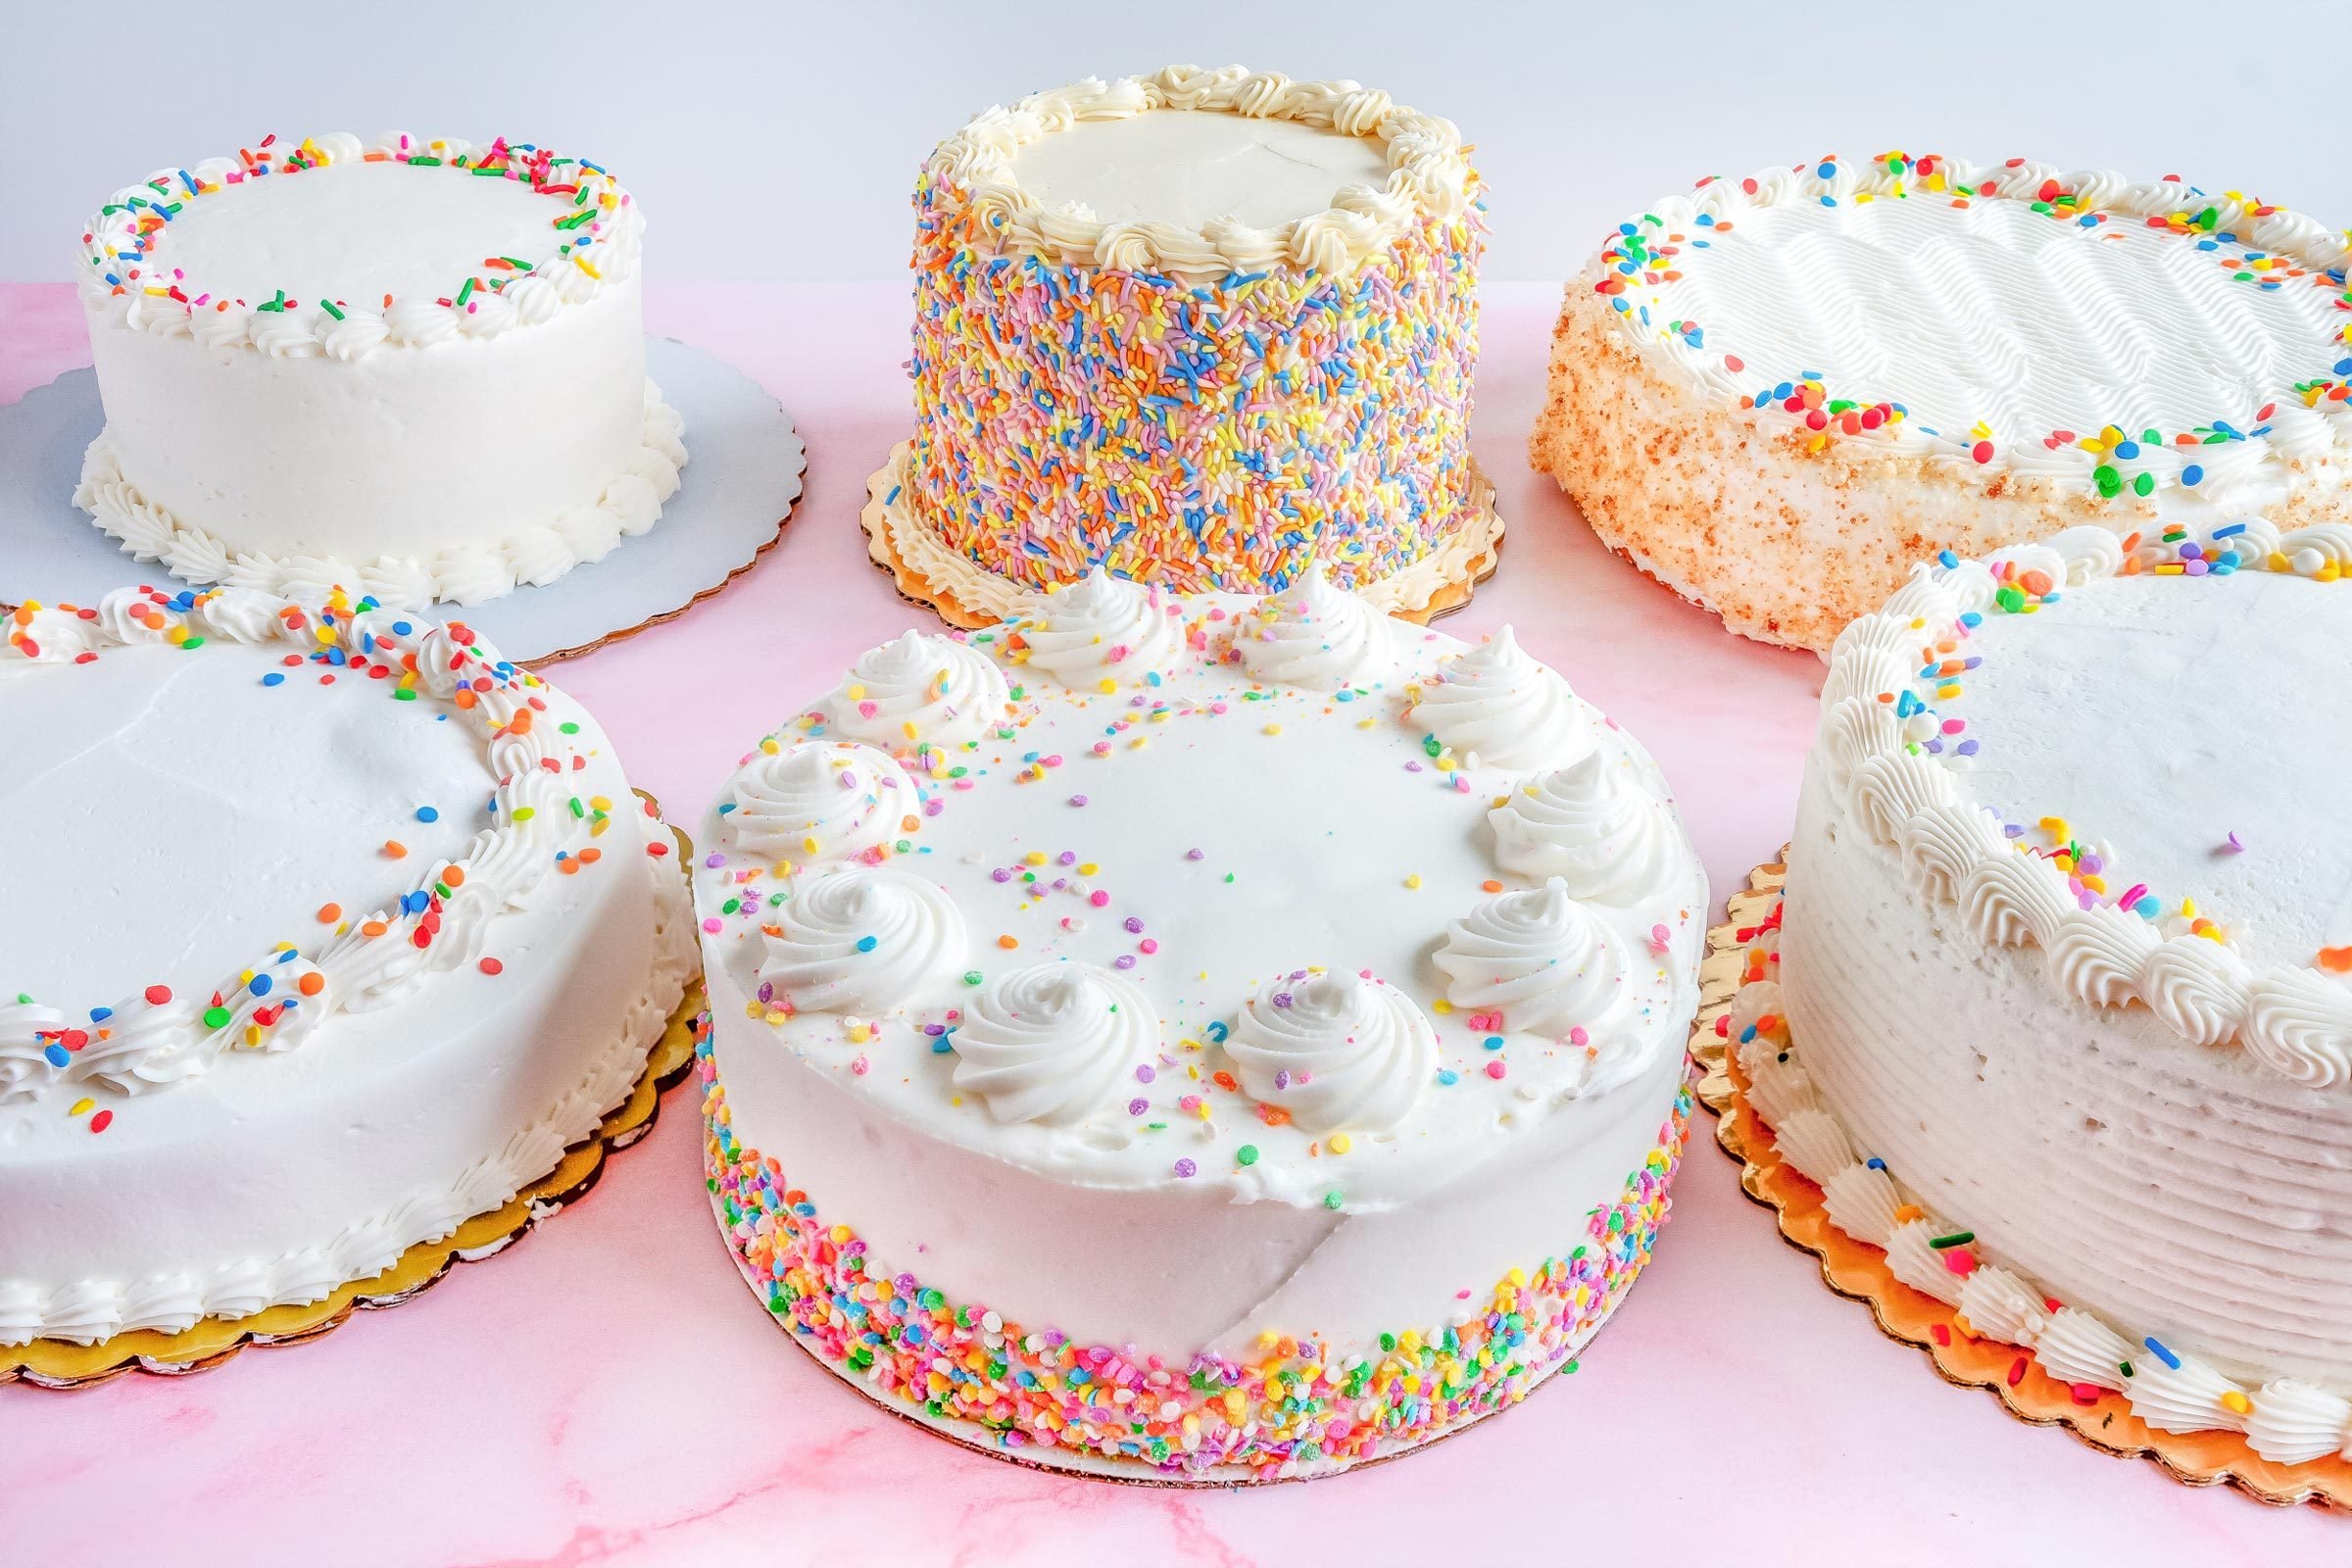 https://www.tasteofhome.com/wp-content/uploads/2022/03/best-grocery-store-cakes_all-cakes-whole_1_Molly-Allen-for-Taste-of-Home-MLedit.jpg